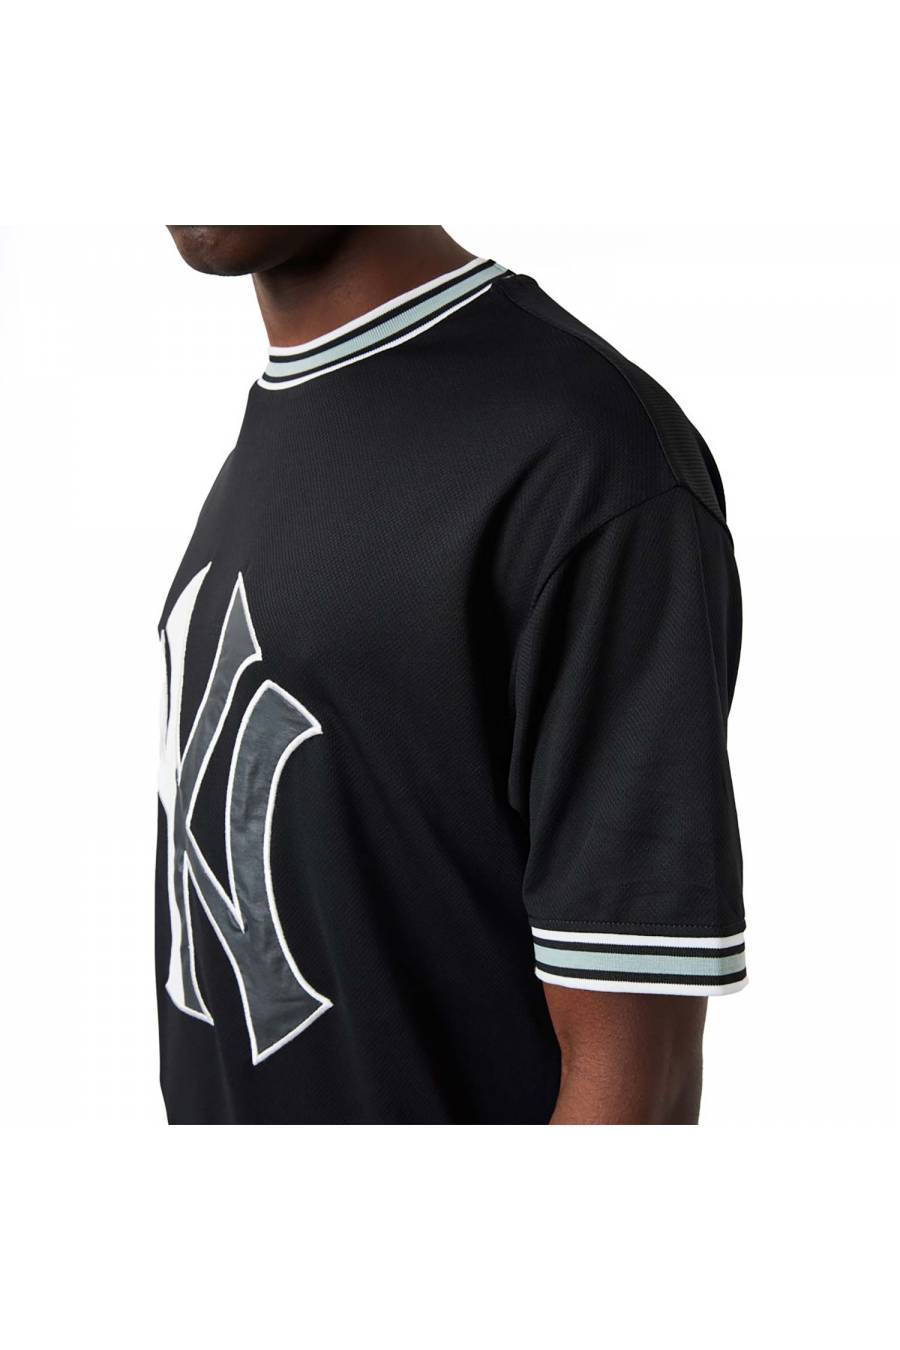 Camiseta New Era New York Yankees MLB Team Logo 60284629